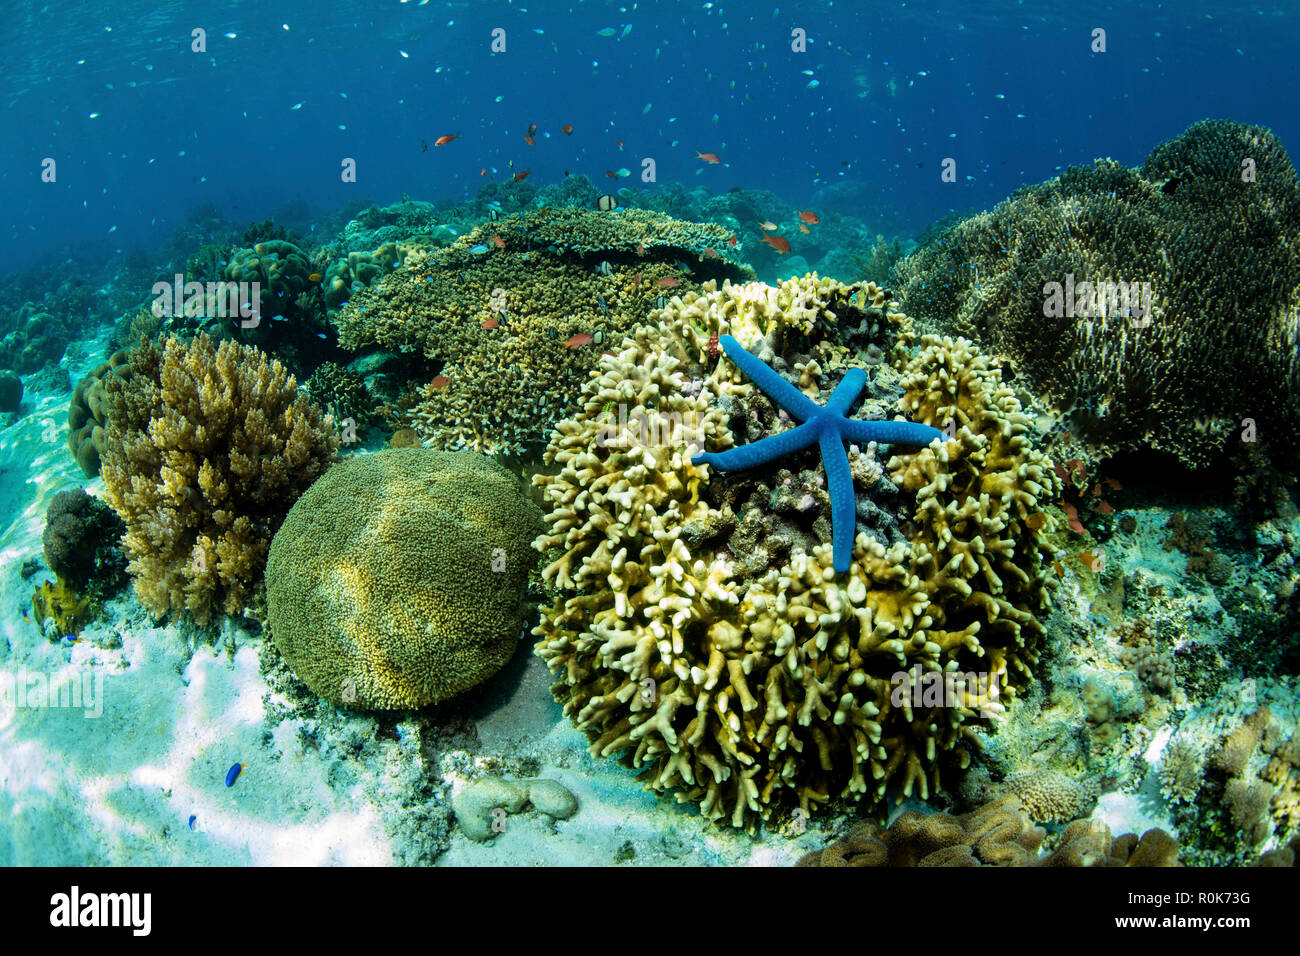 A blue starfish, Linkia laevigata, clings to a beautiful coral reef. Stock Photo